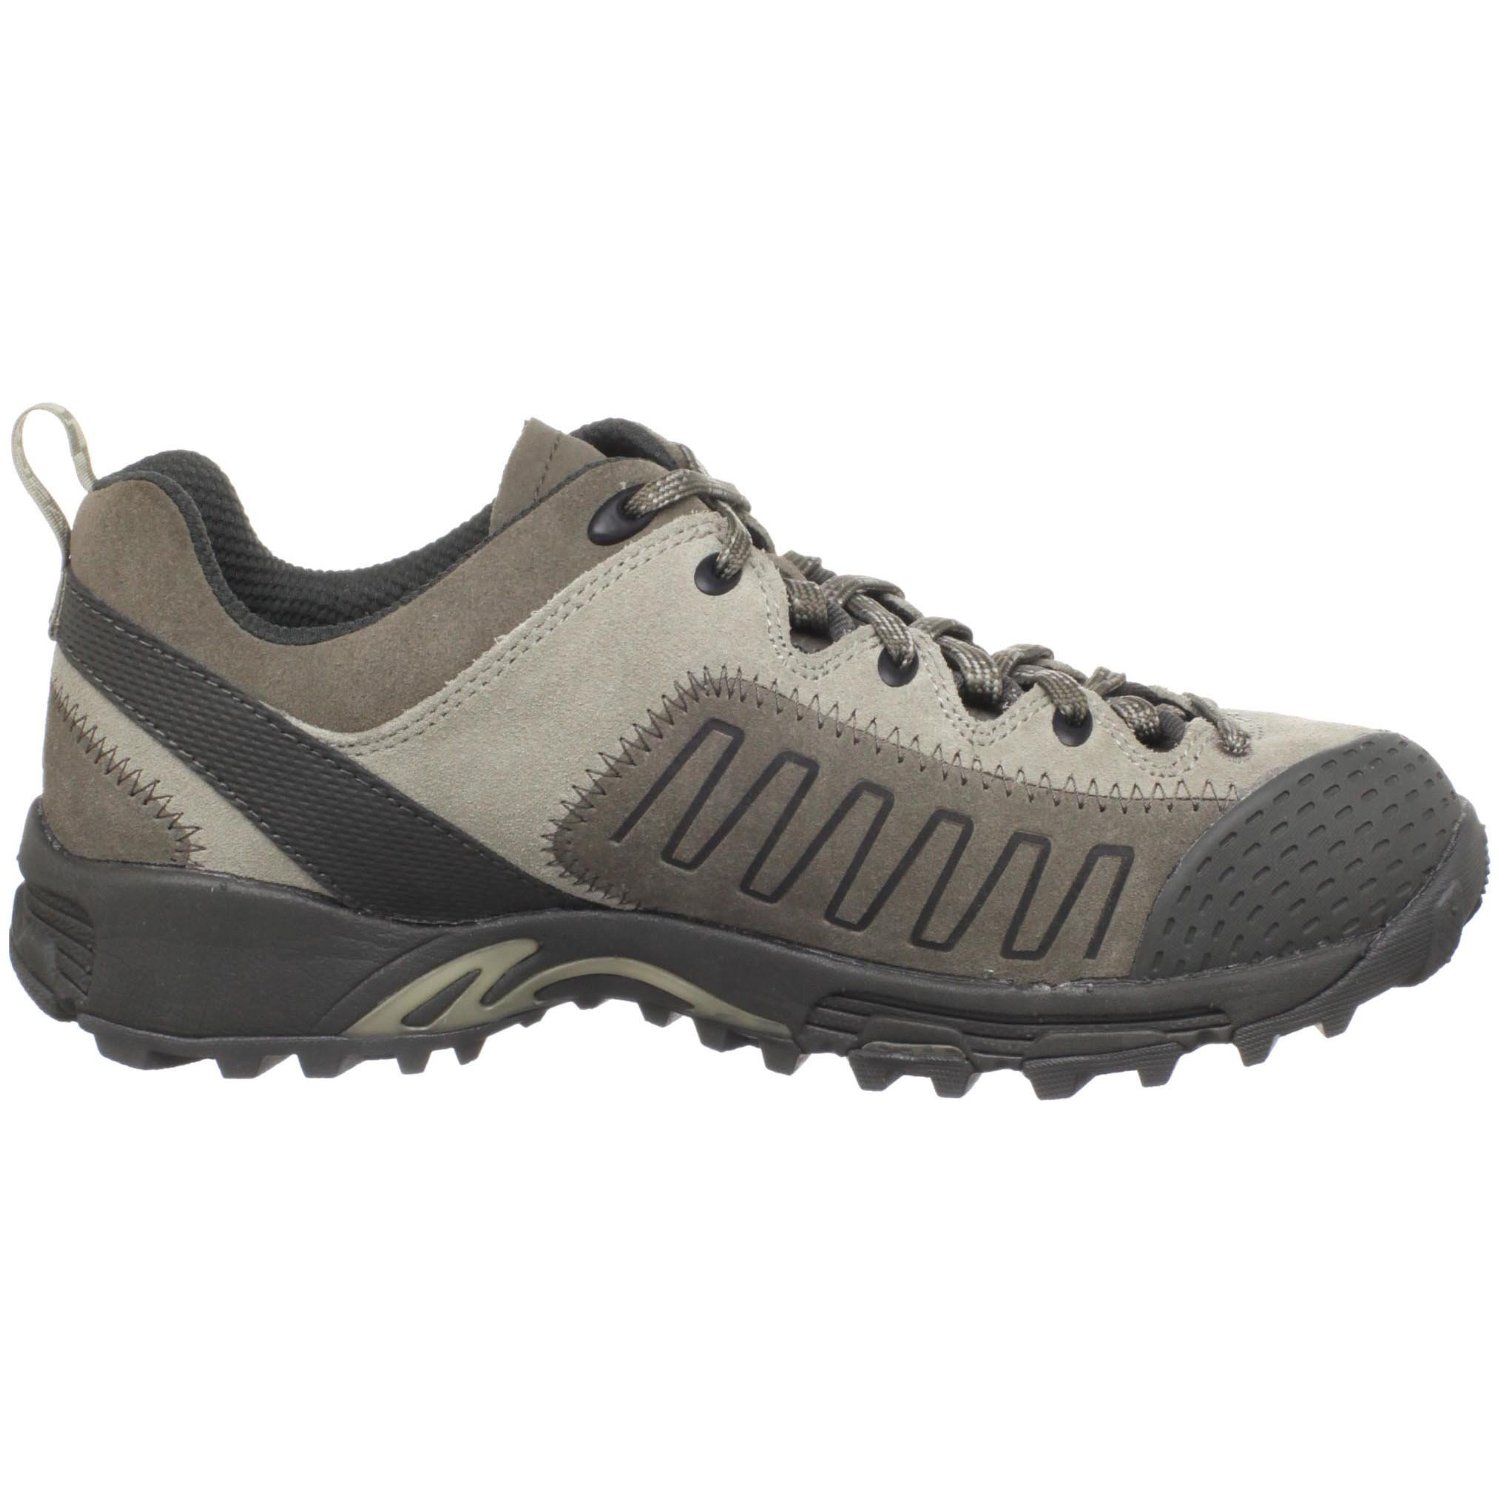 Hiking Shoes Here: Vasque Men's Juxt Light Hiking Shoe